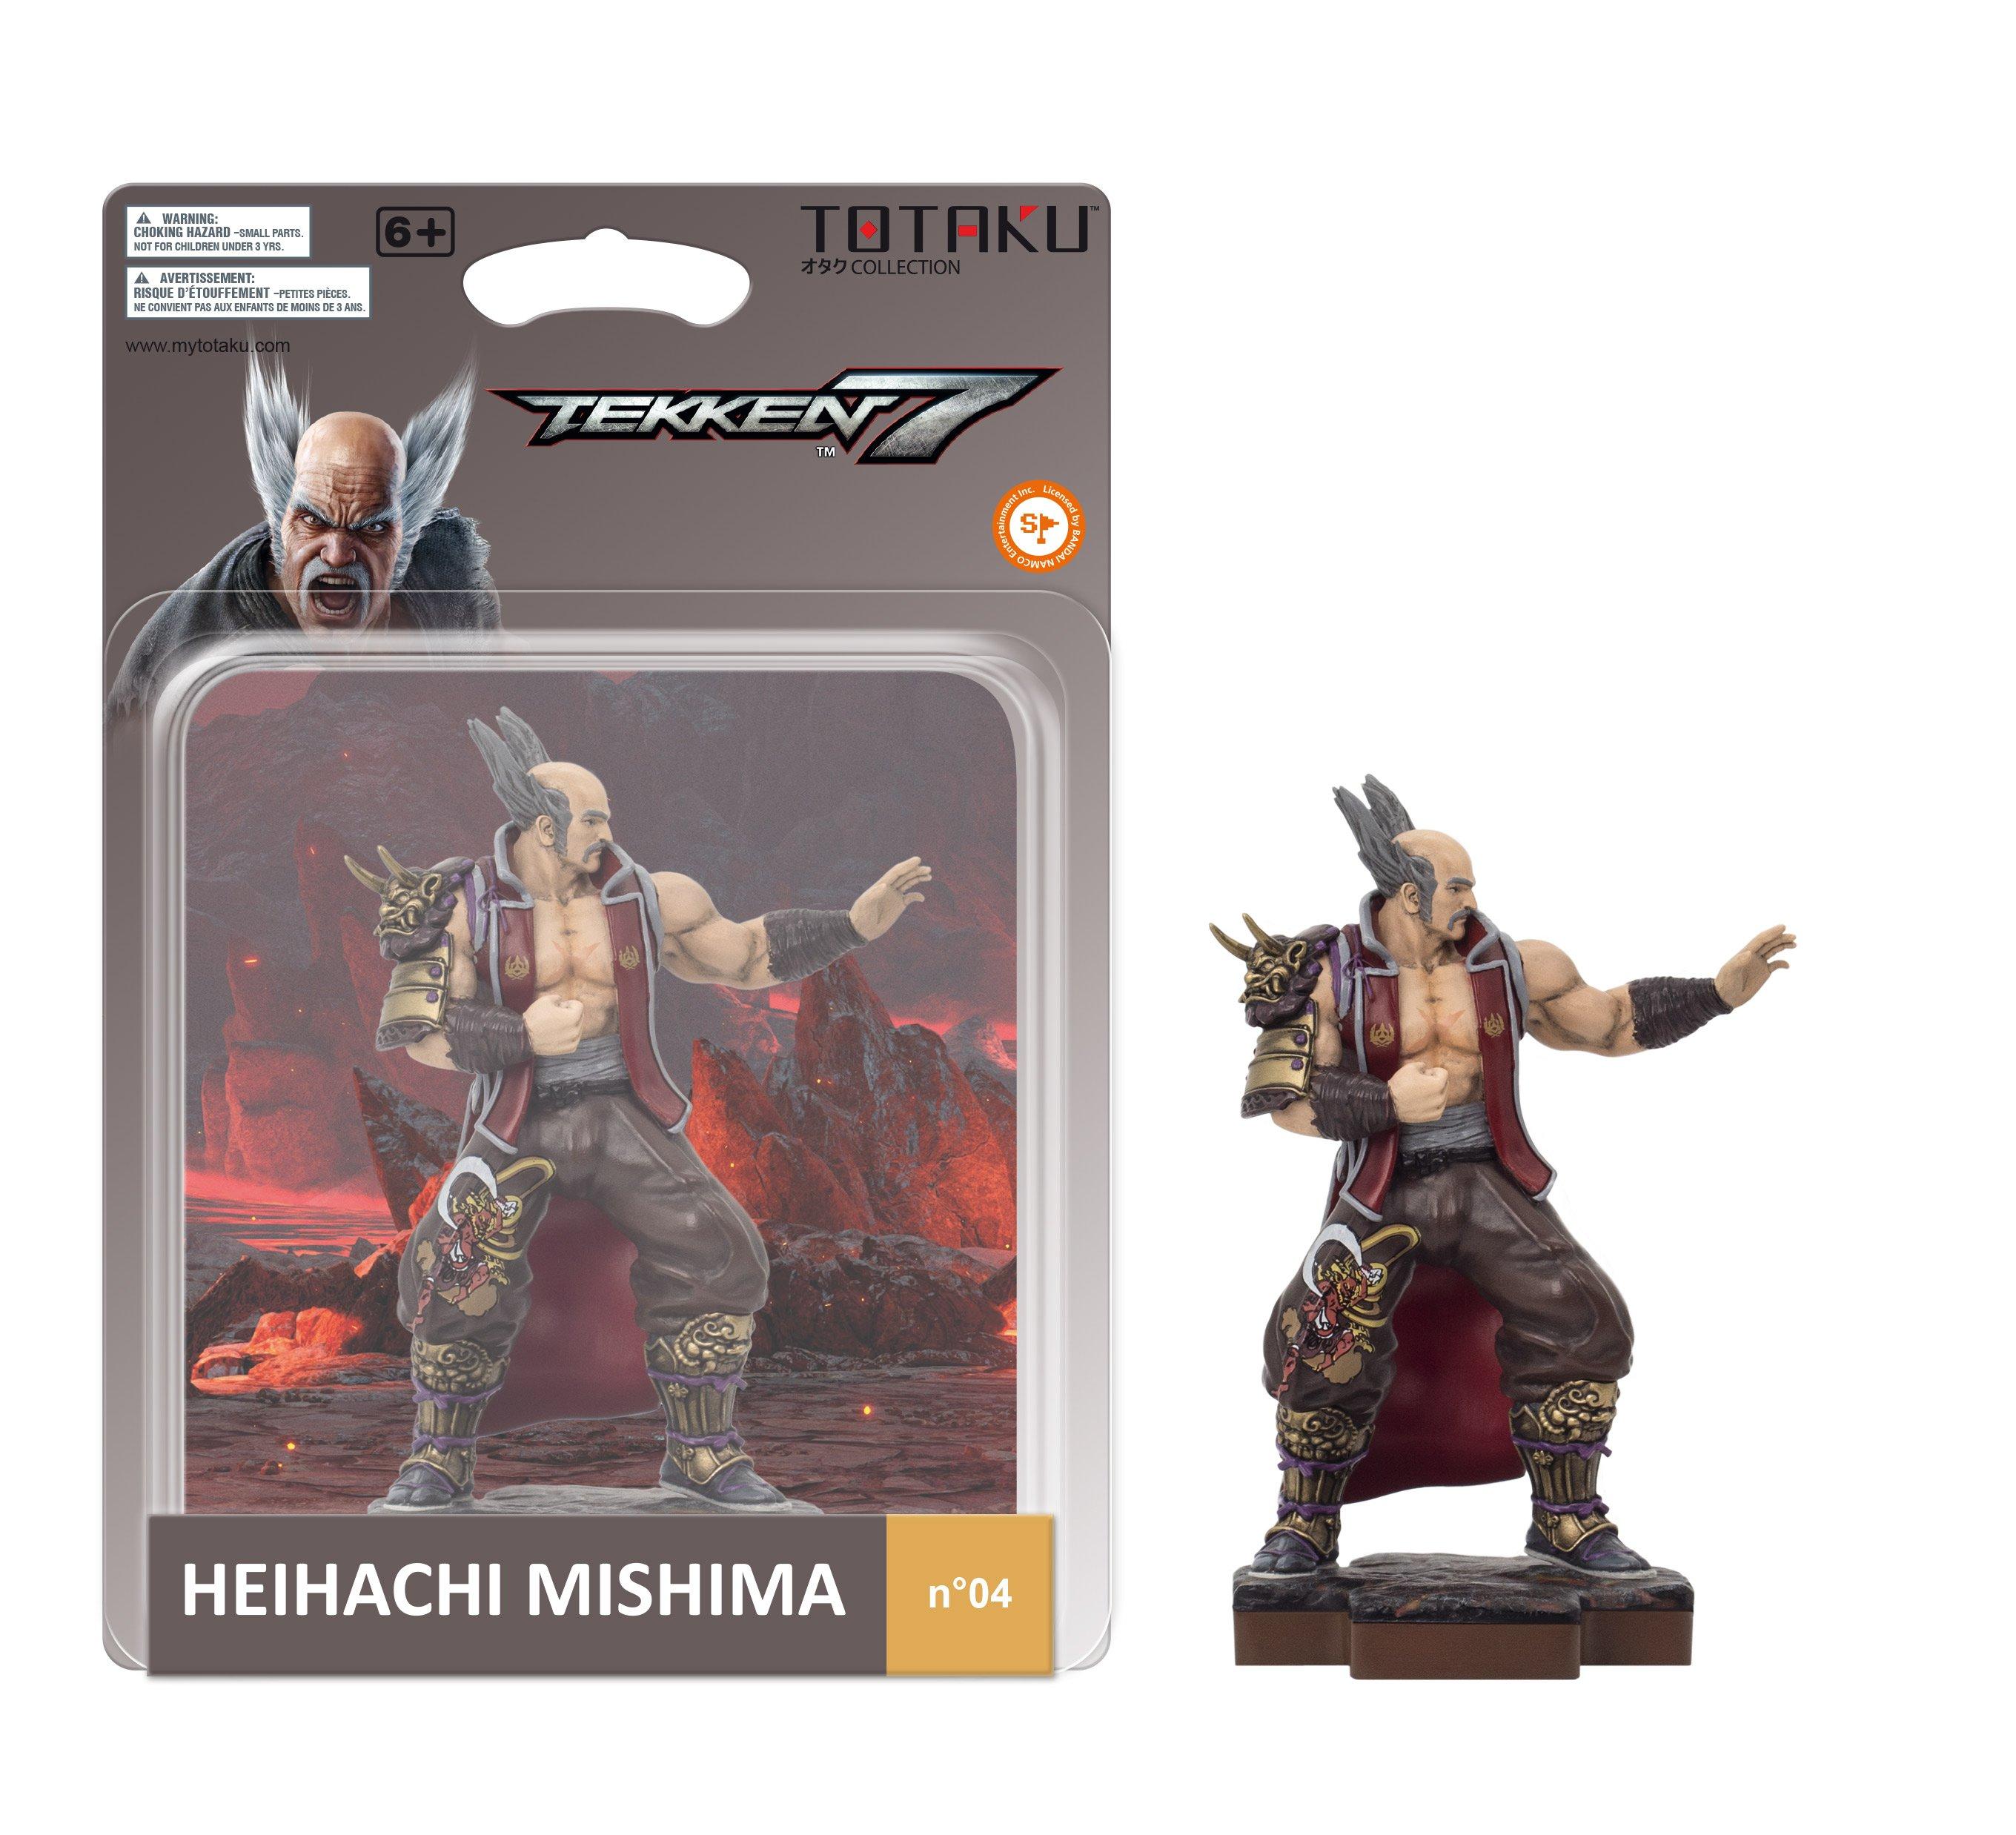 Tekken 7 Heihachi Mishima TOTAKU Collection Figure Only at GameStop